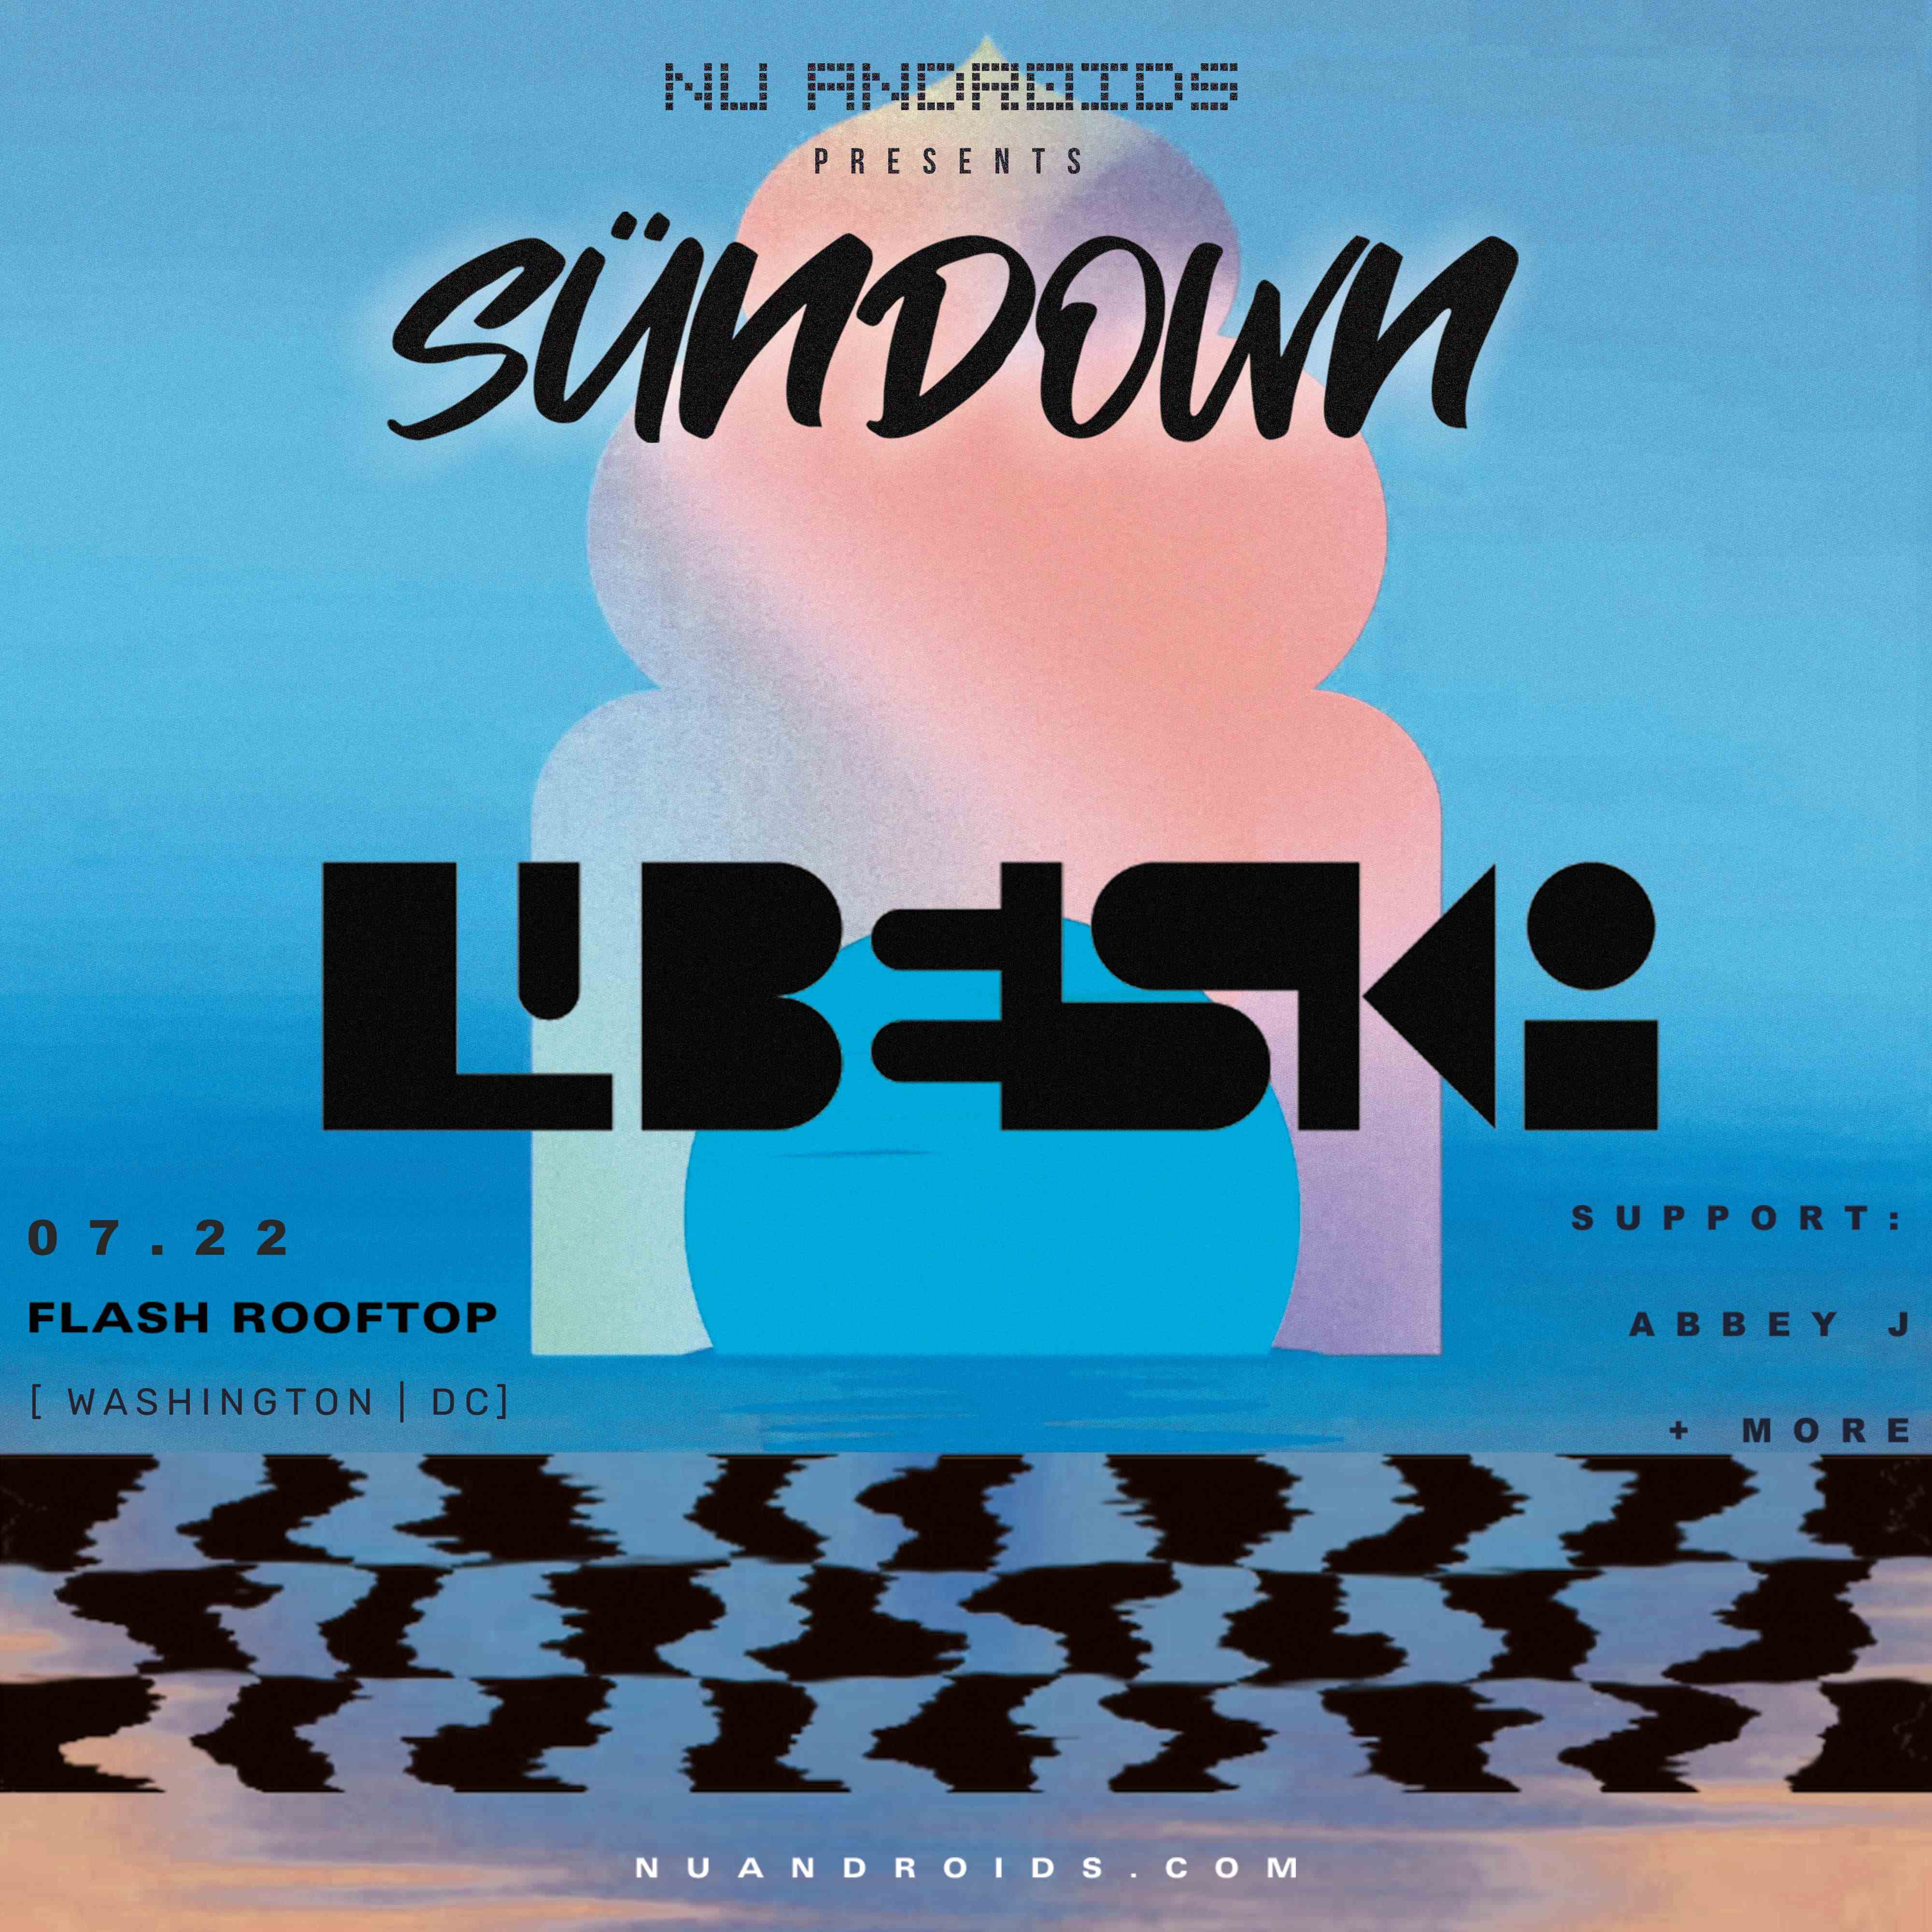 Event image for Nü Androids presents SünDown: Lubelski (21+)